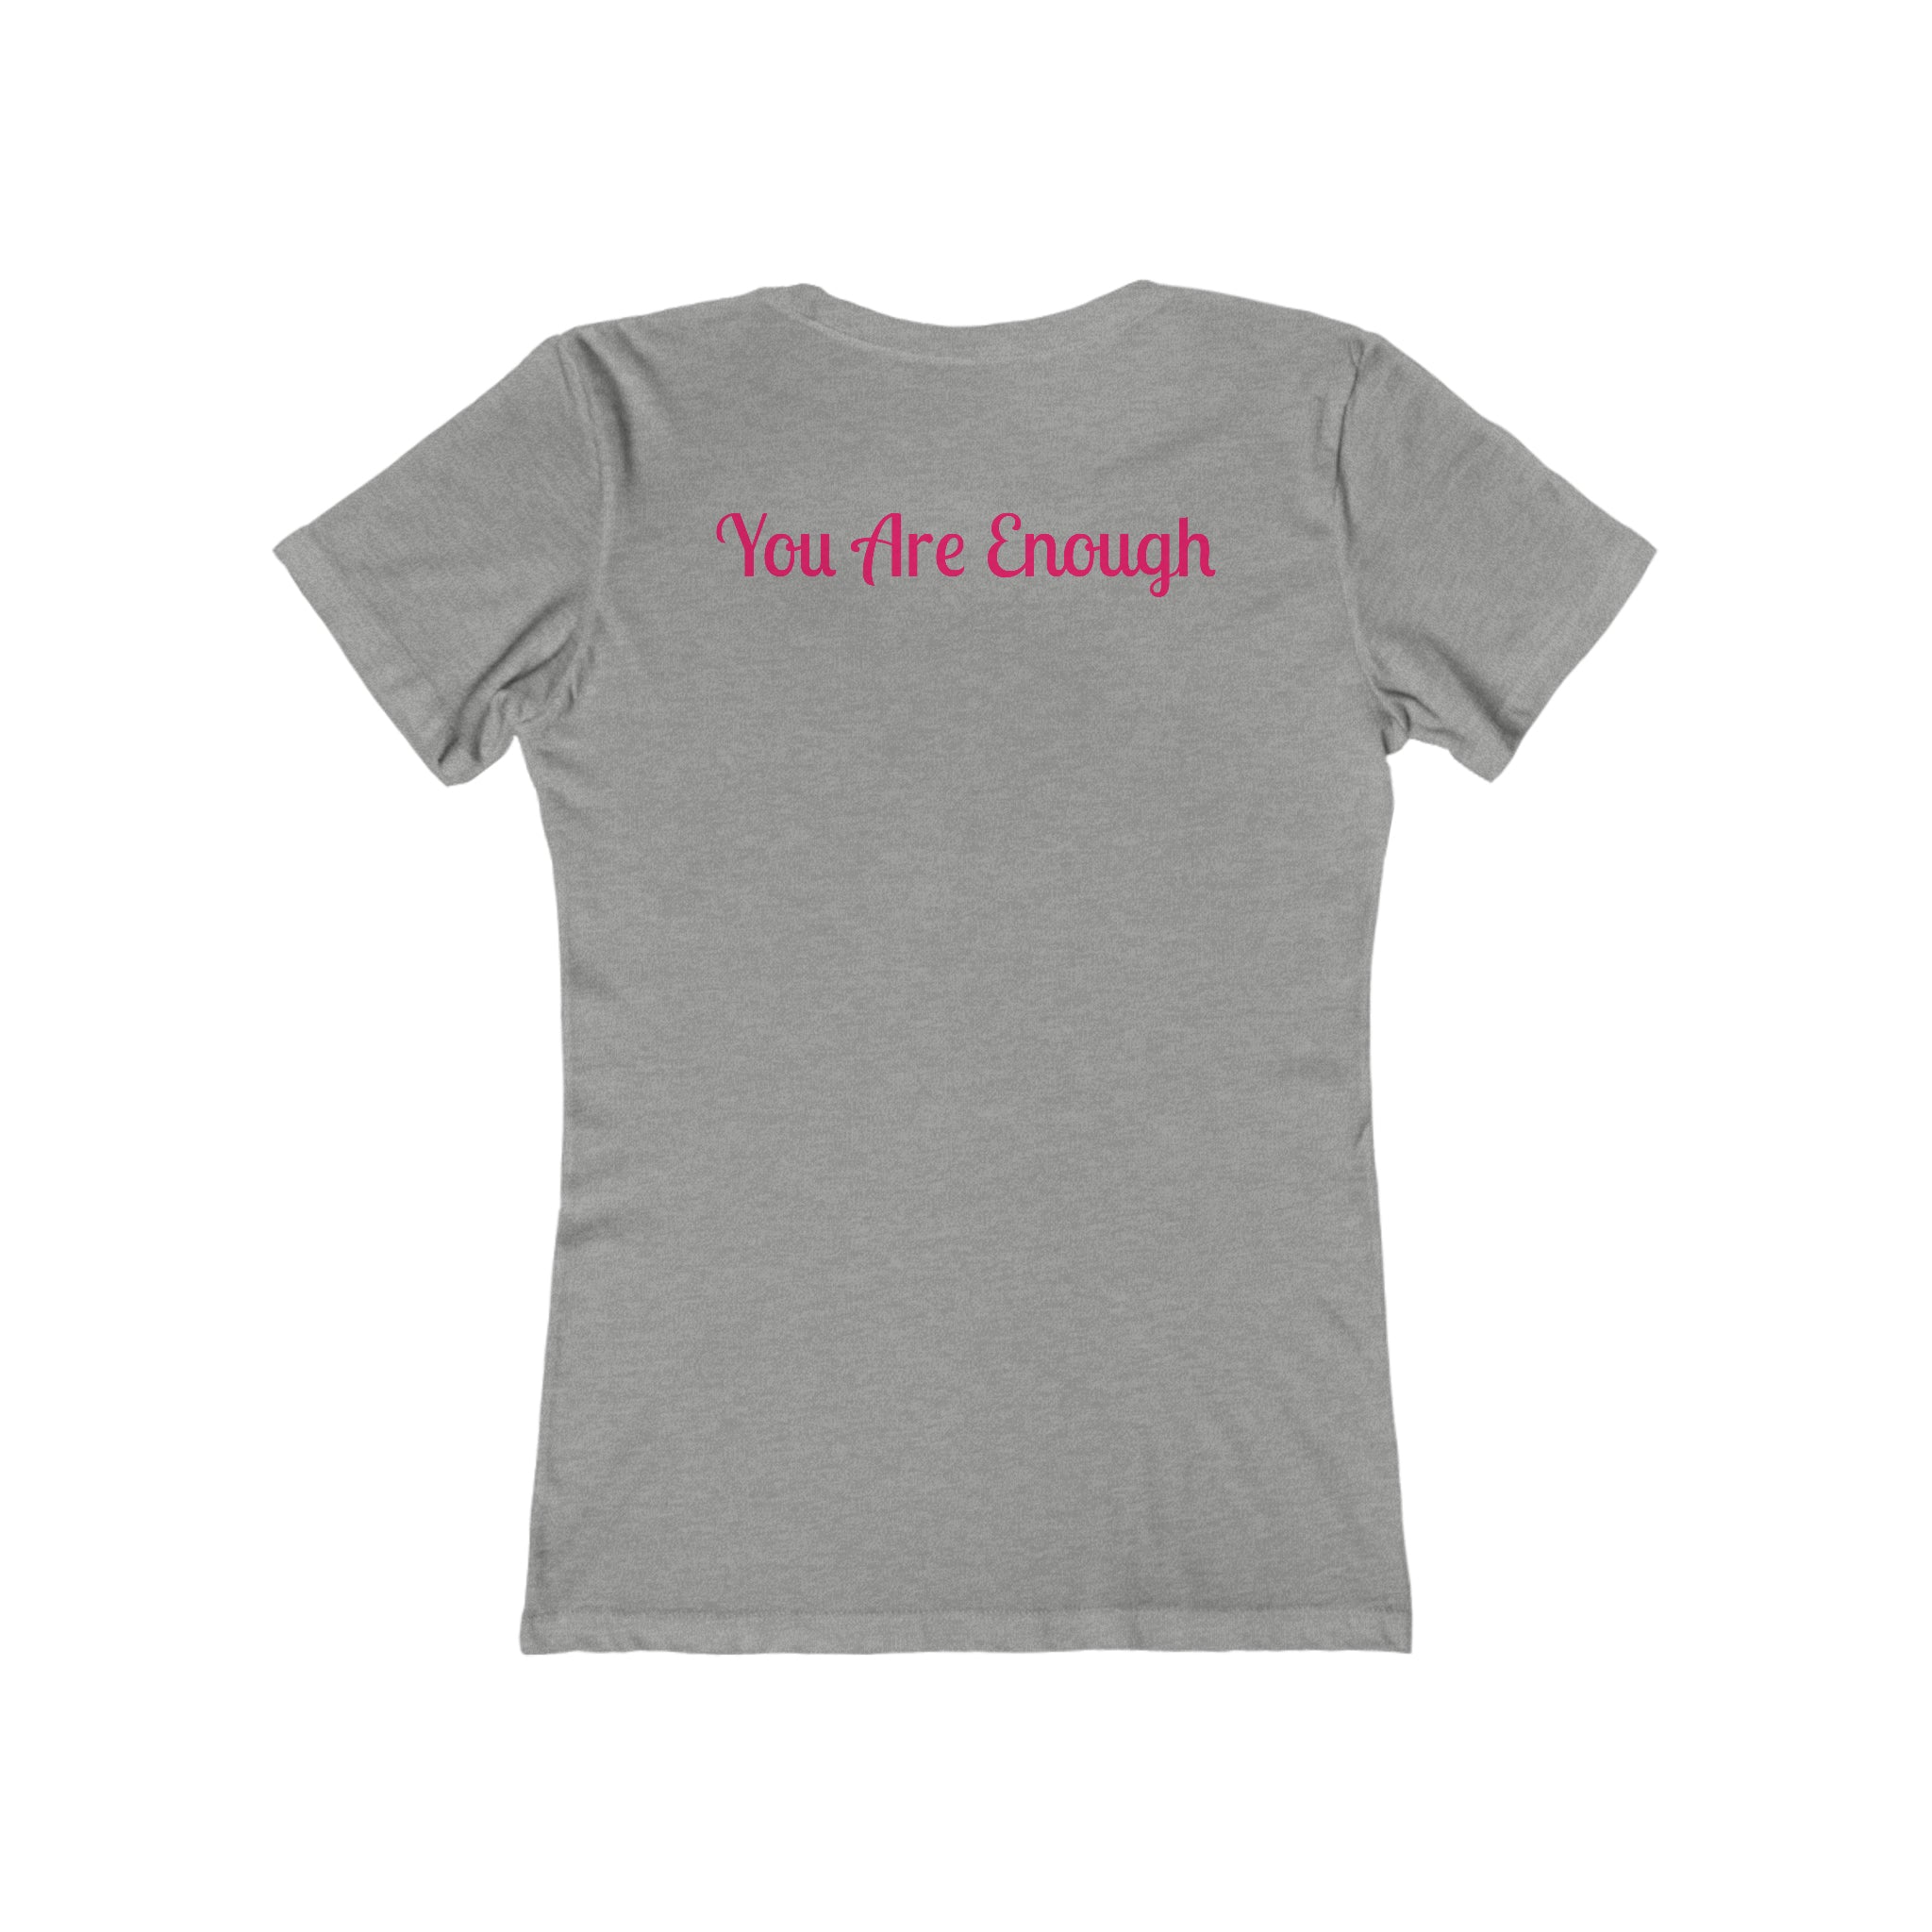 You Are Enough Boyfriend Tee: Affirm Your Worth Heather Grey Awareness Break the Stigma Mental Health Support Pledge Donation slim fit shirt Tee women shirt T-Shirt 17196007914697675904_2048 Printify